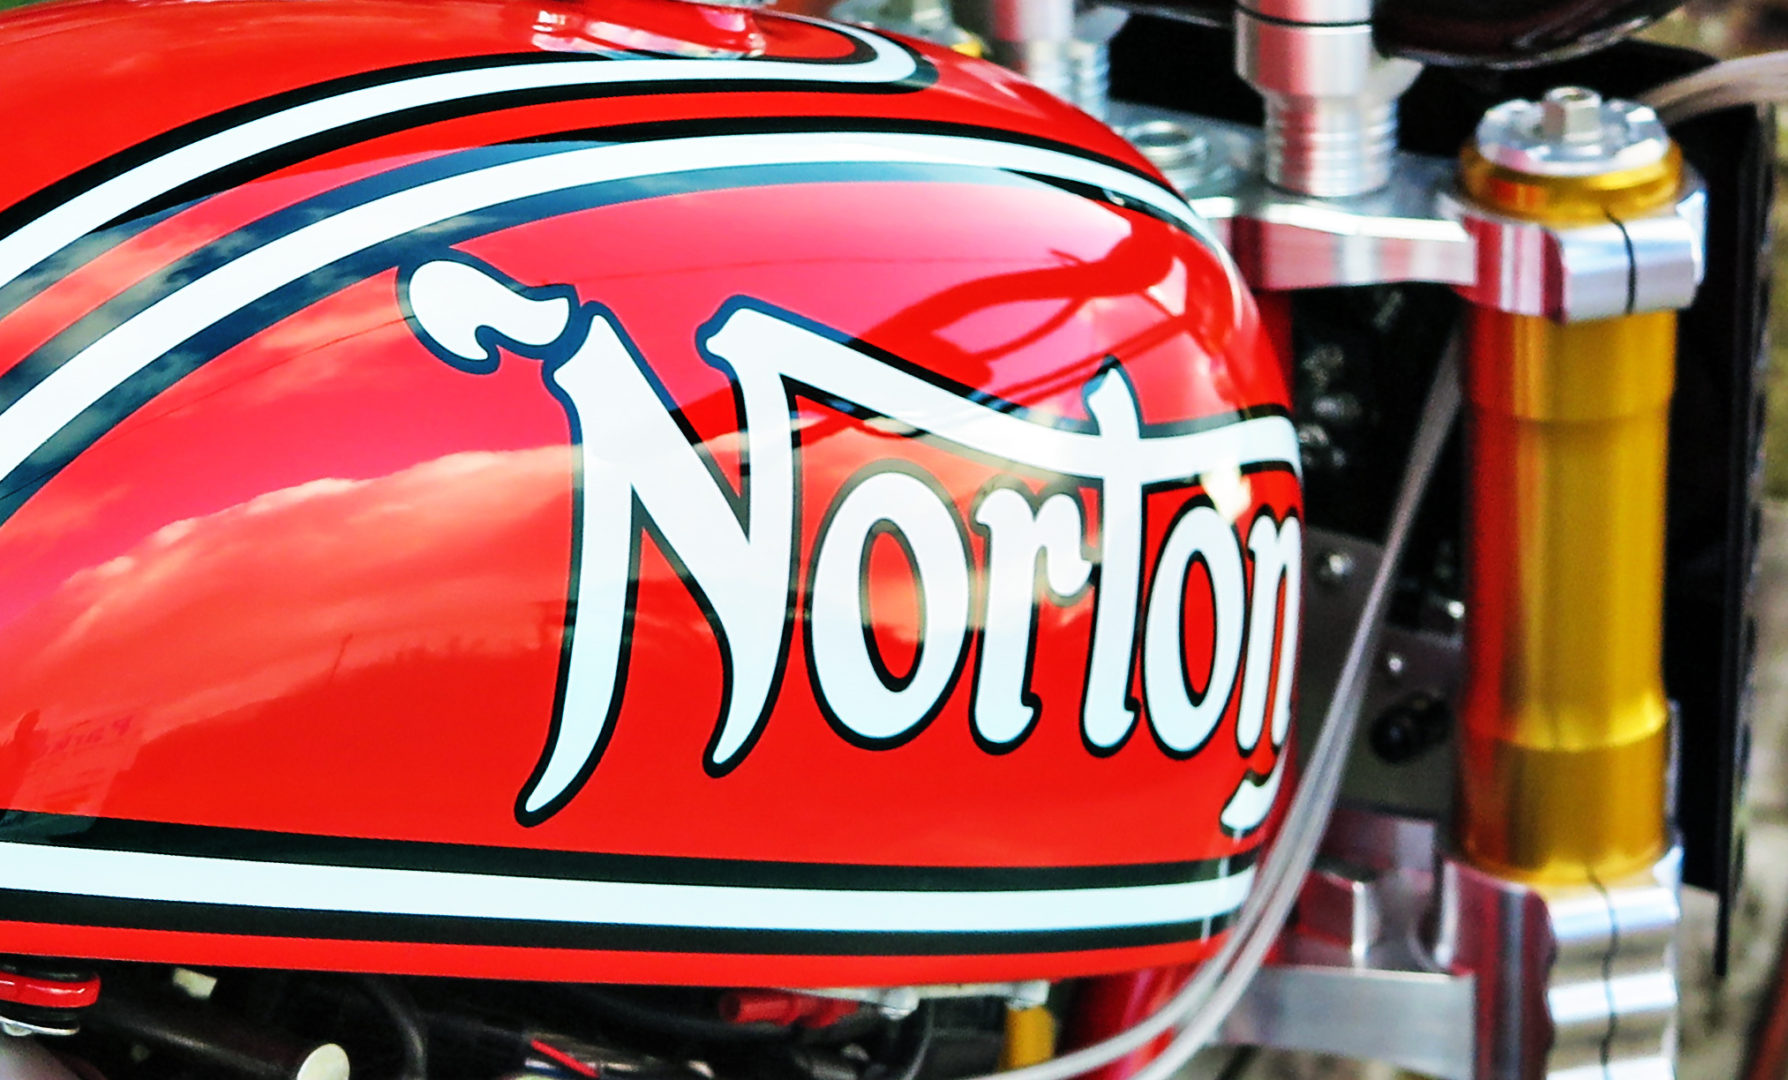 motorcycle Norton logo